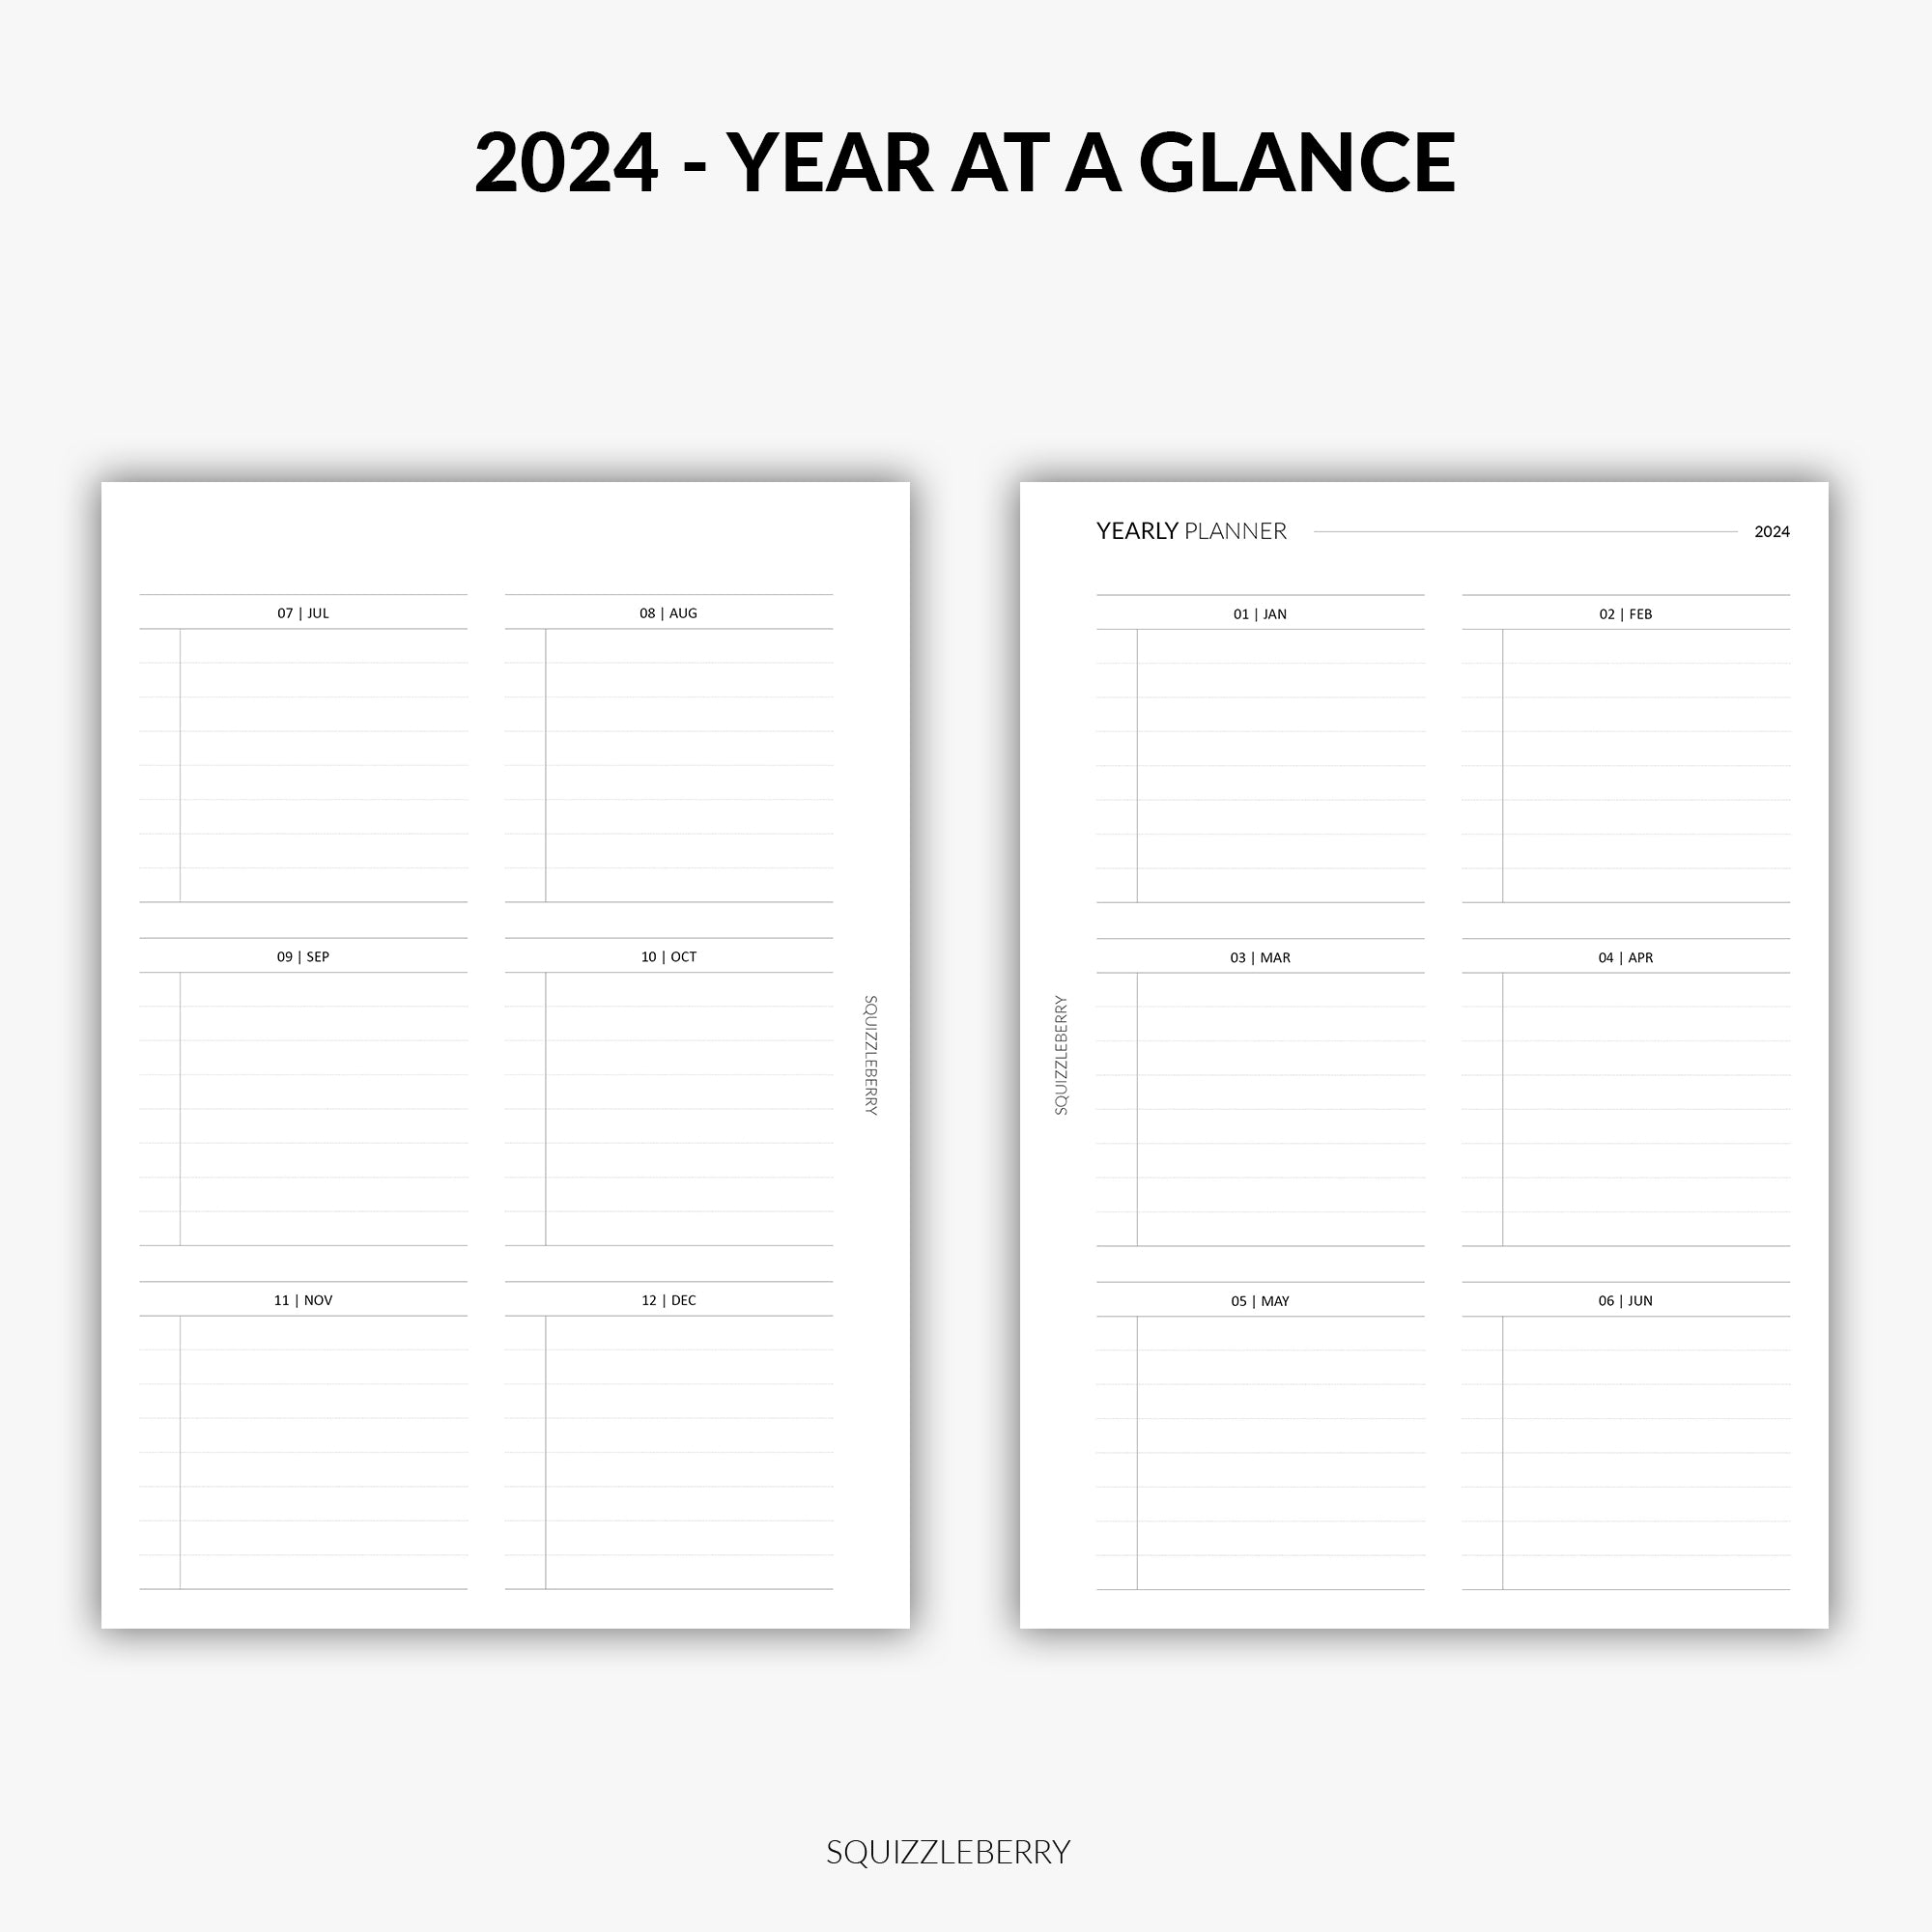 2024 - Year at a Glance